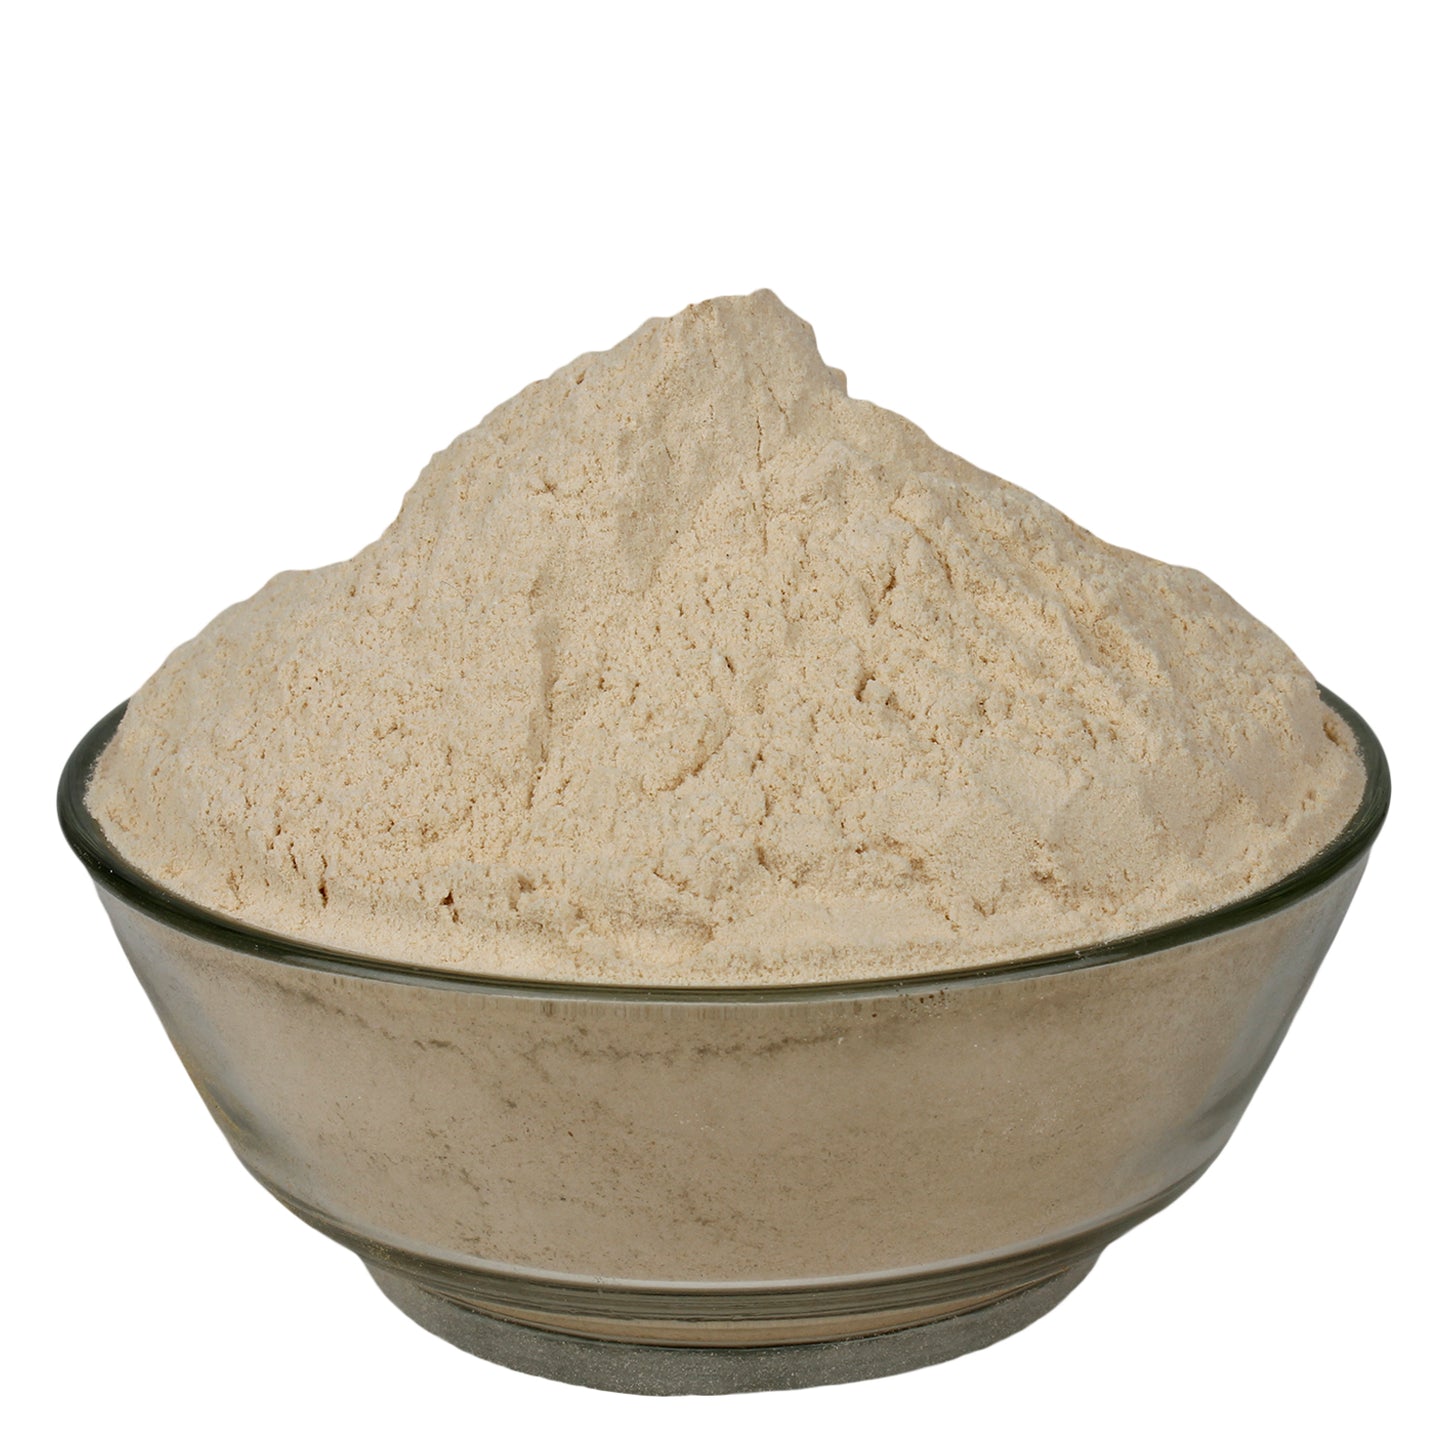 Musli Safed Powder - Chlorophytum Borivilianum - White Musli Powder